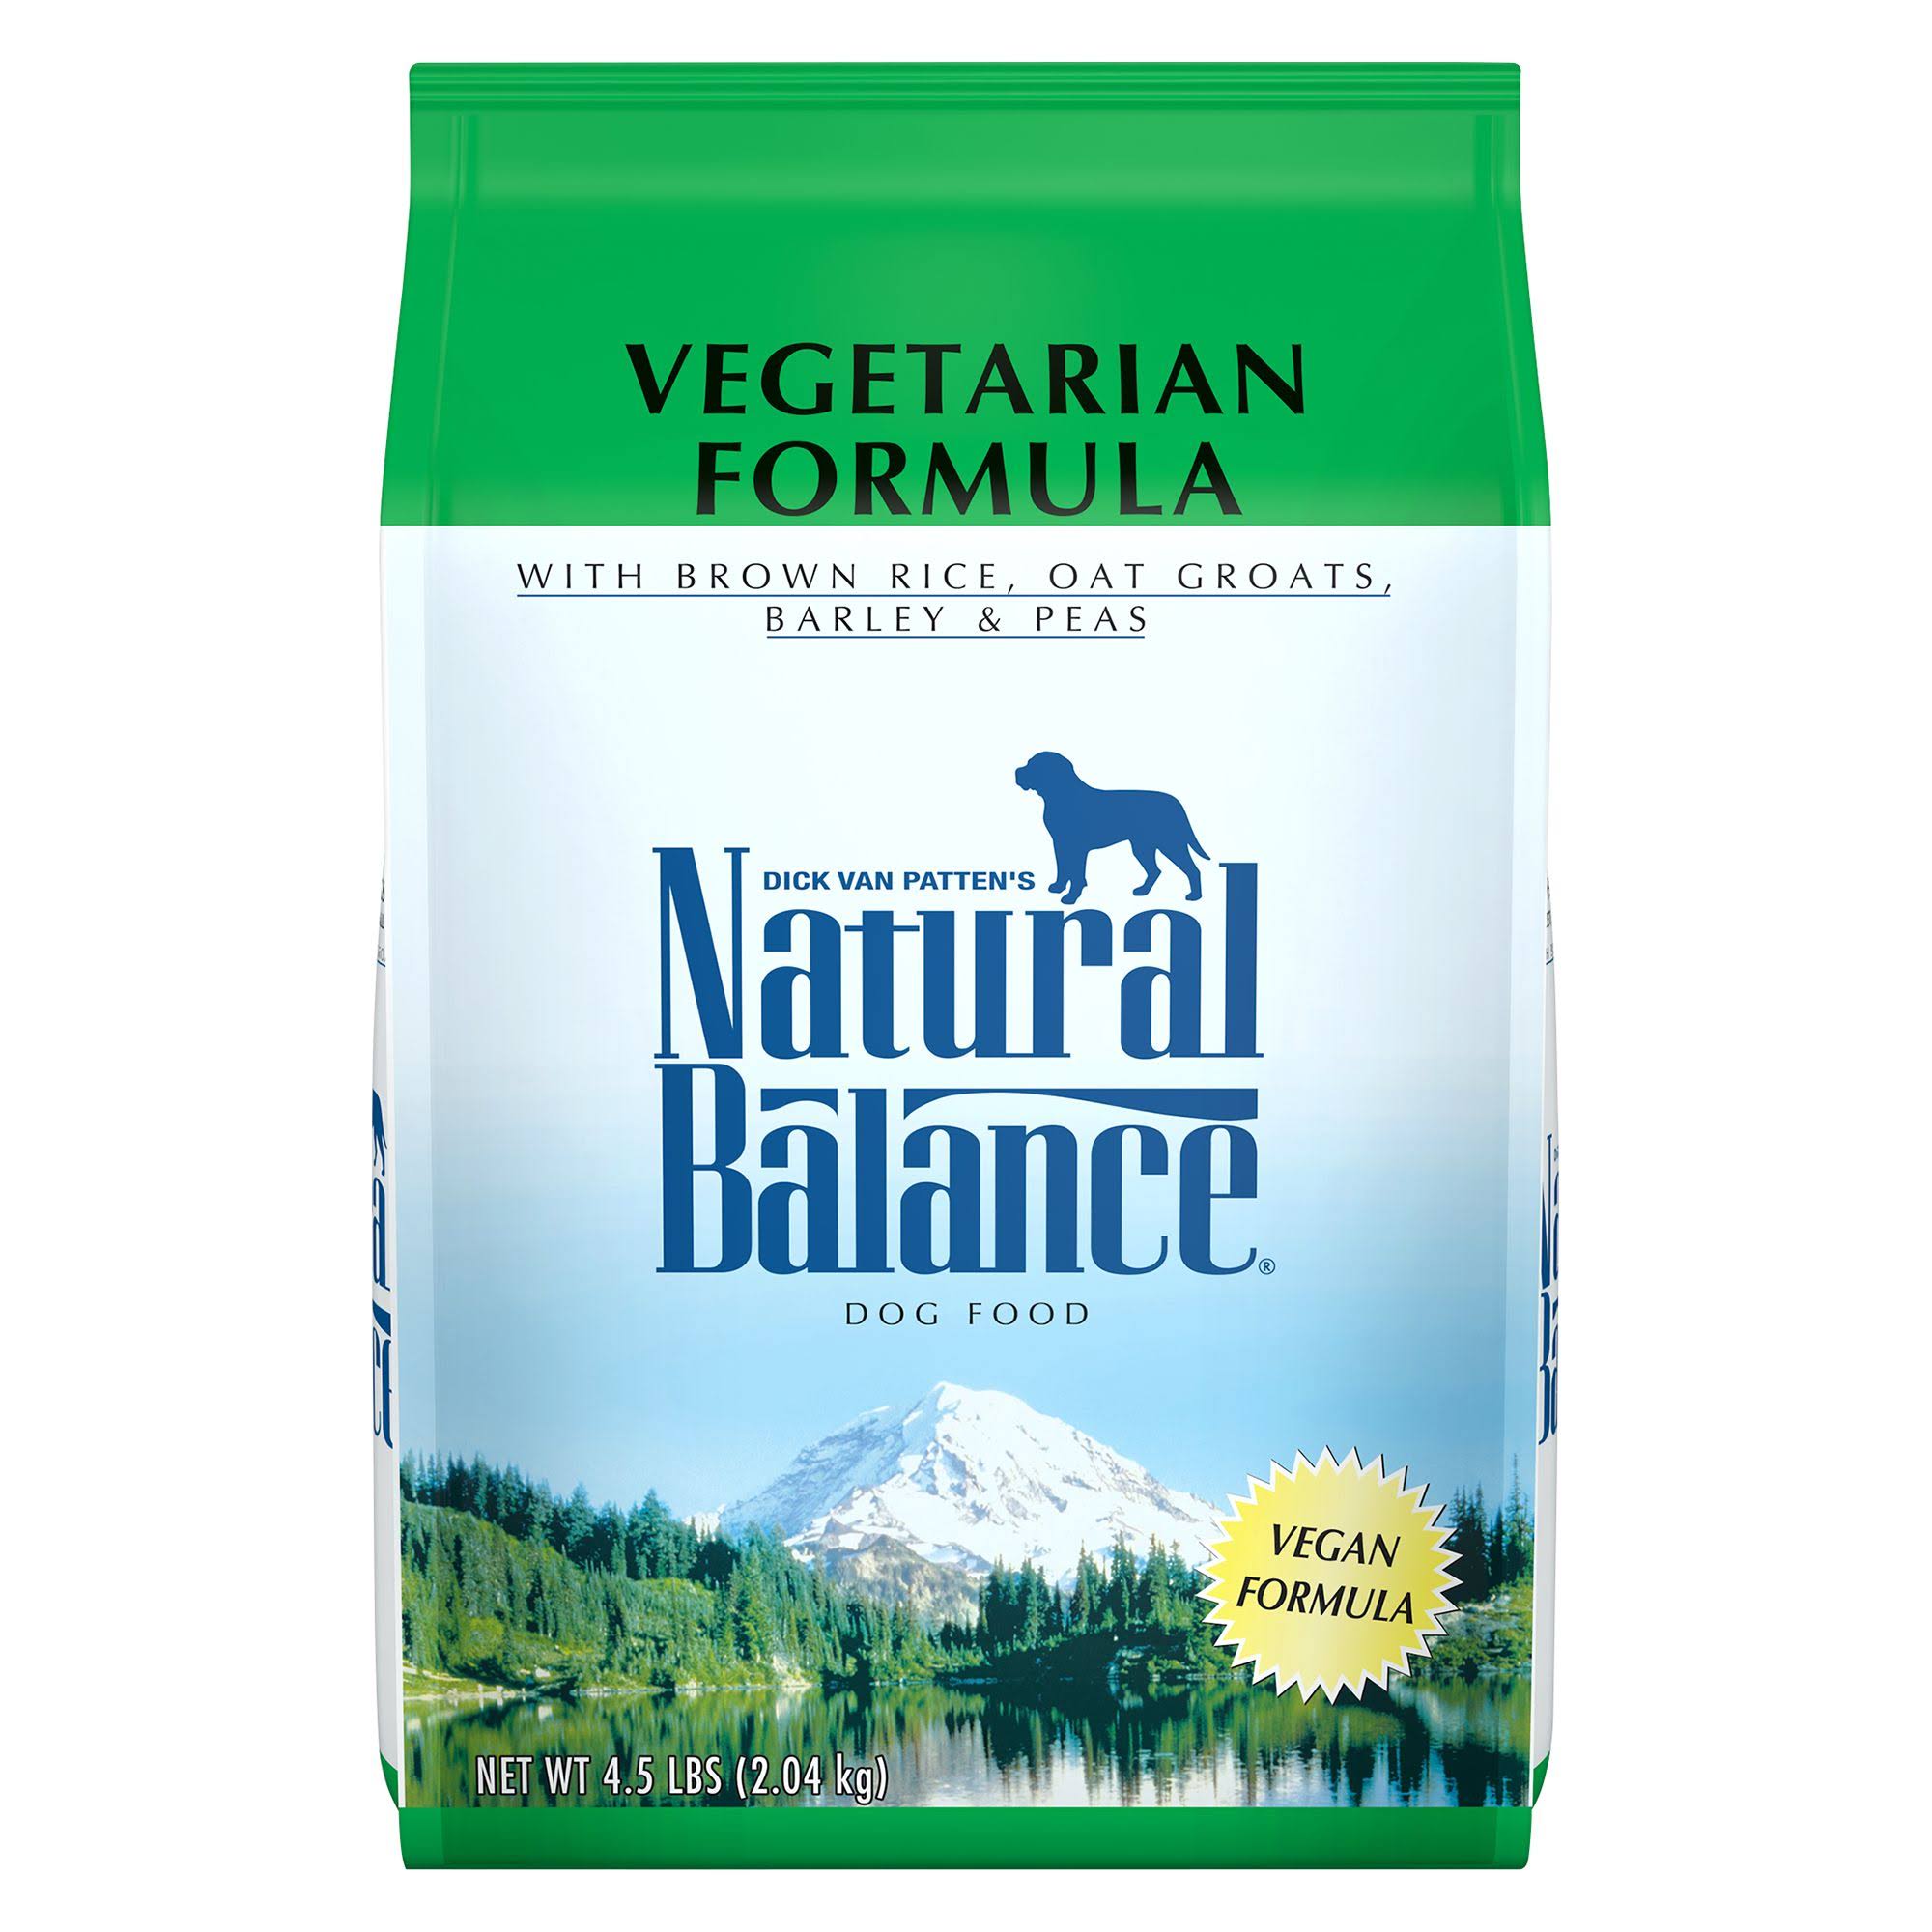 Natural Balance Vegetarian Formula Dry Dog Food